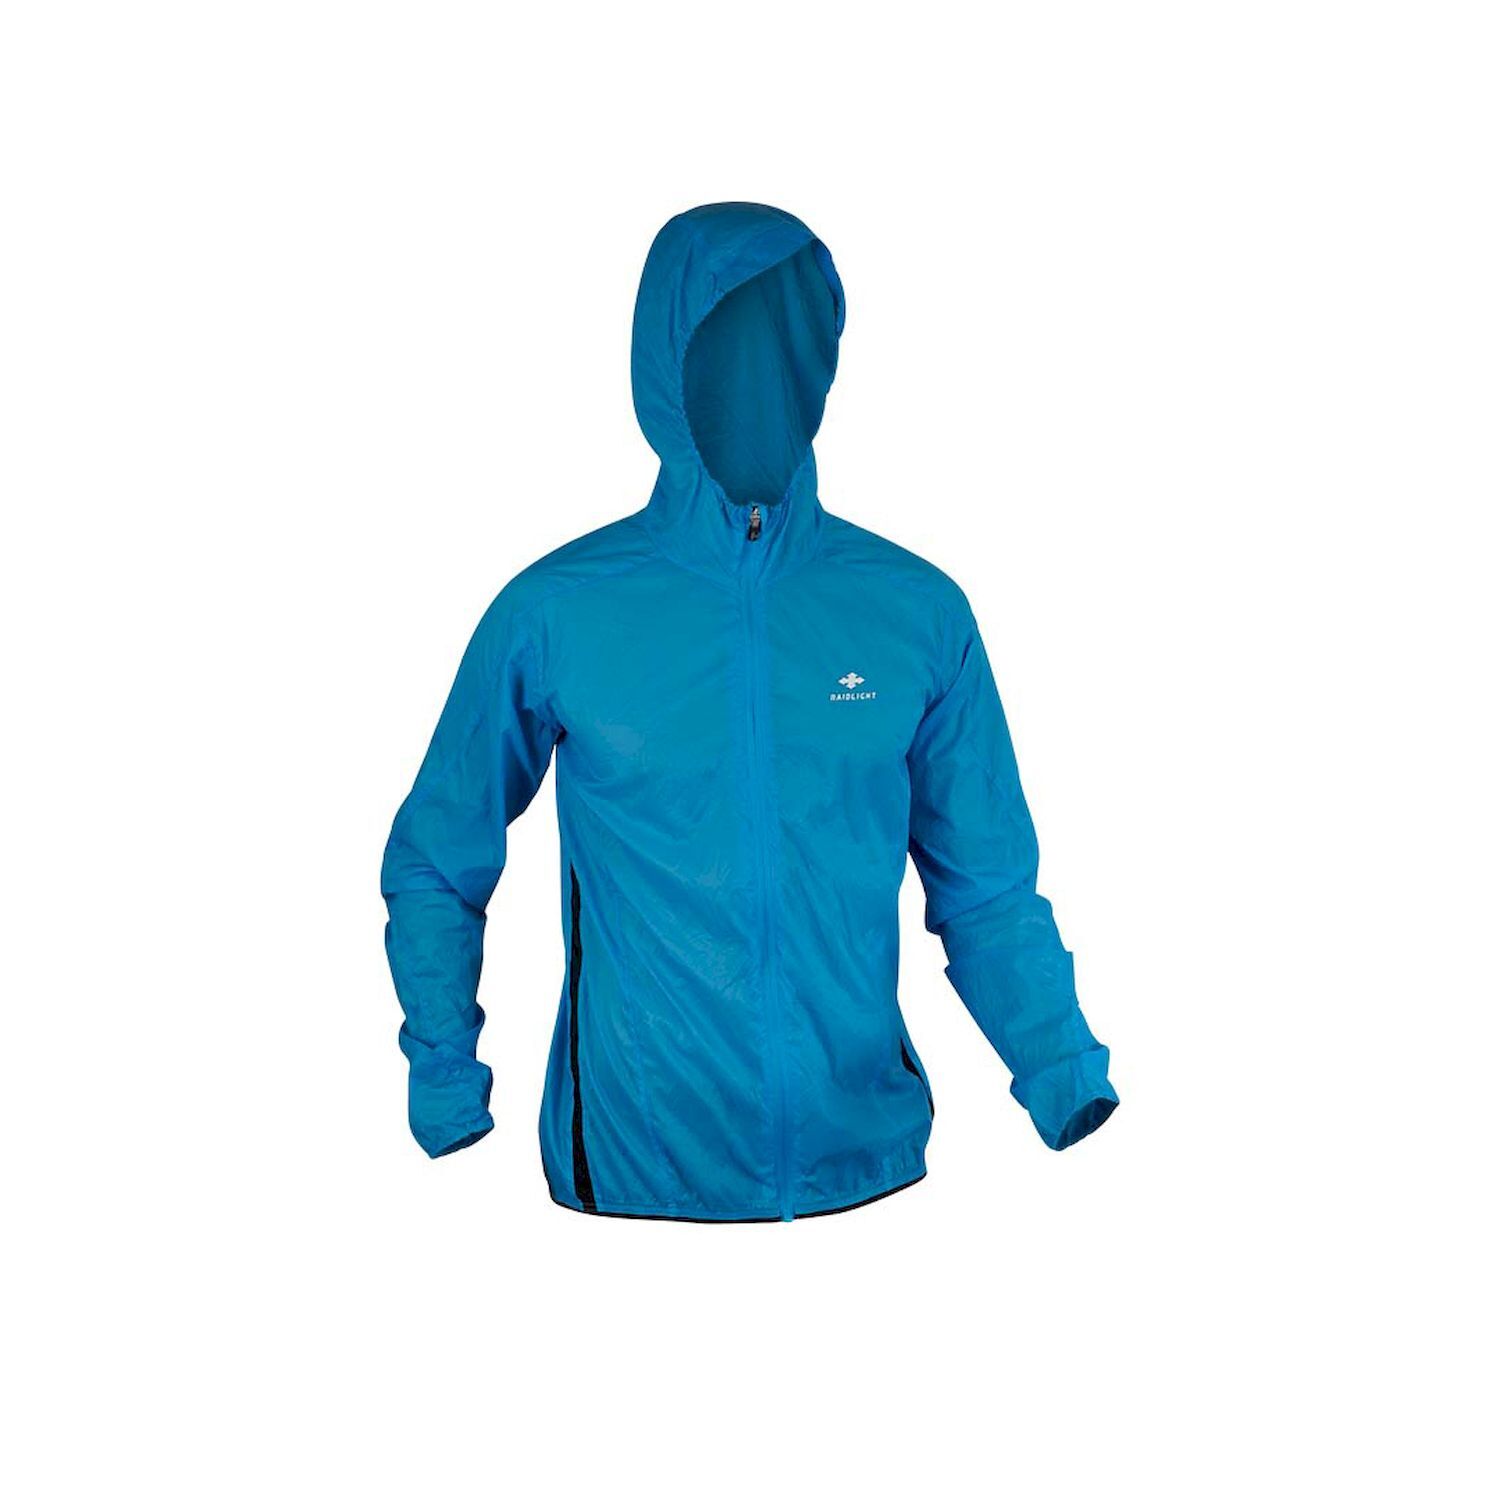 Raidlight Ultralight Windproof Jacket - Windproof jacket - Men's